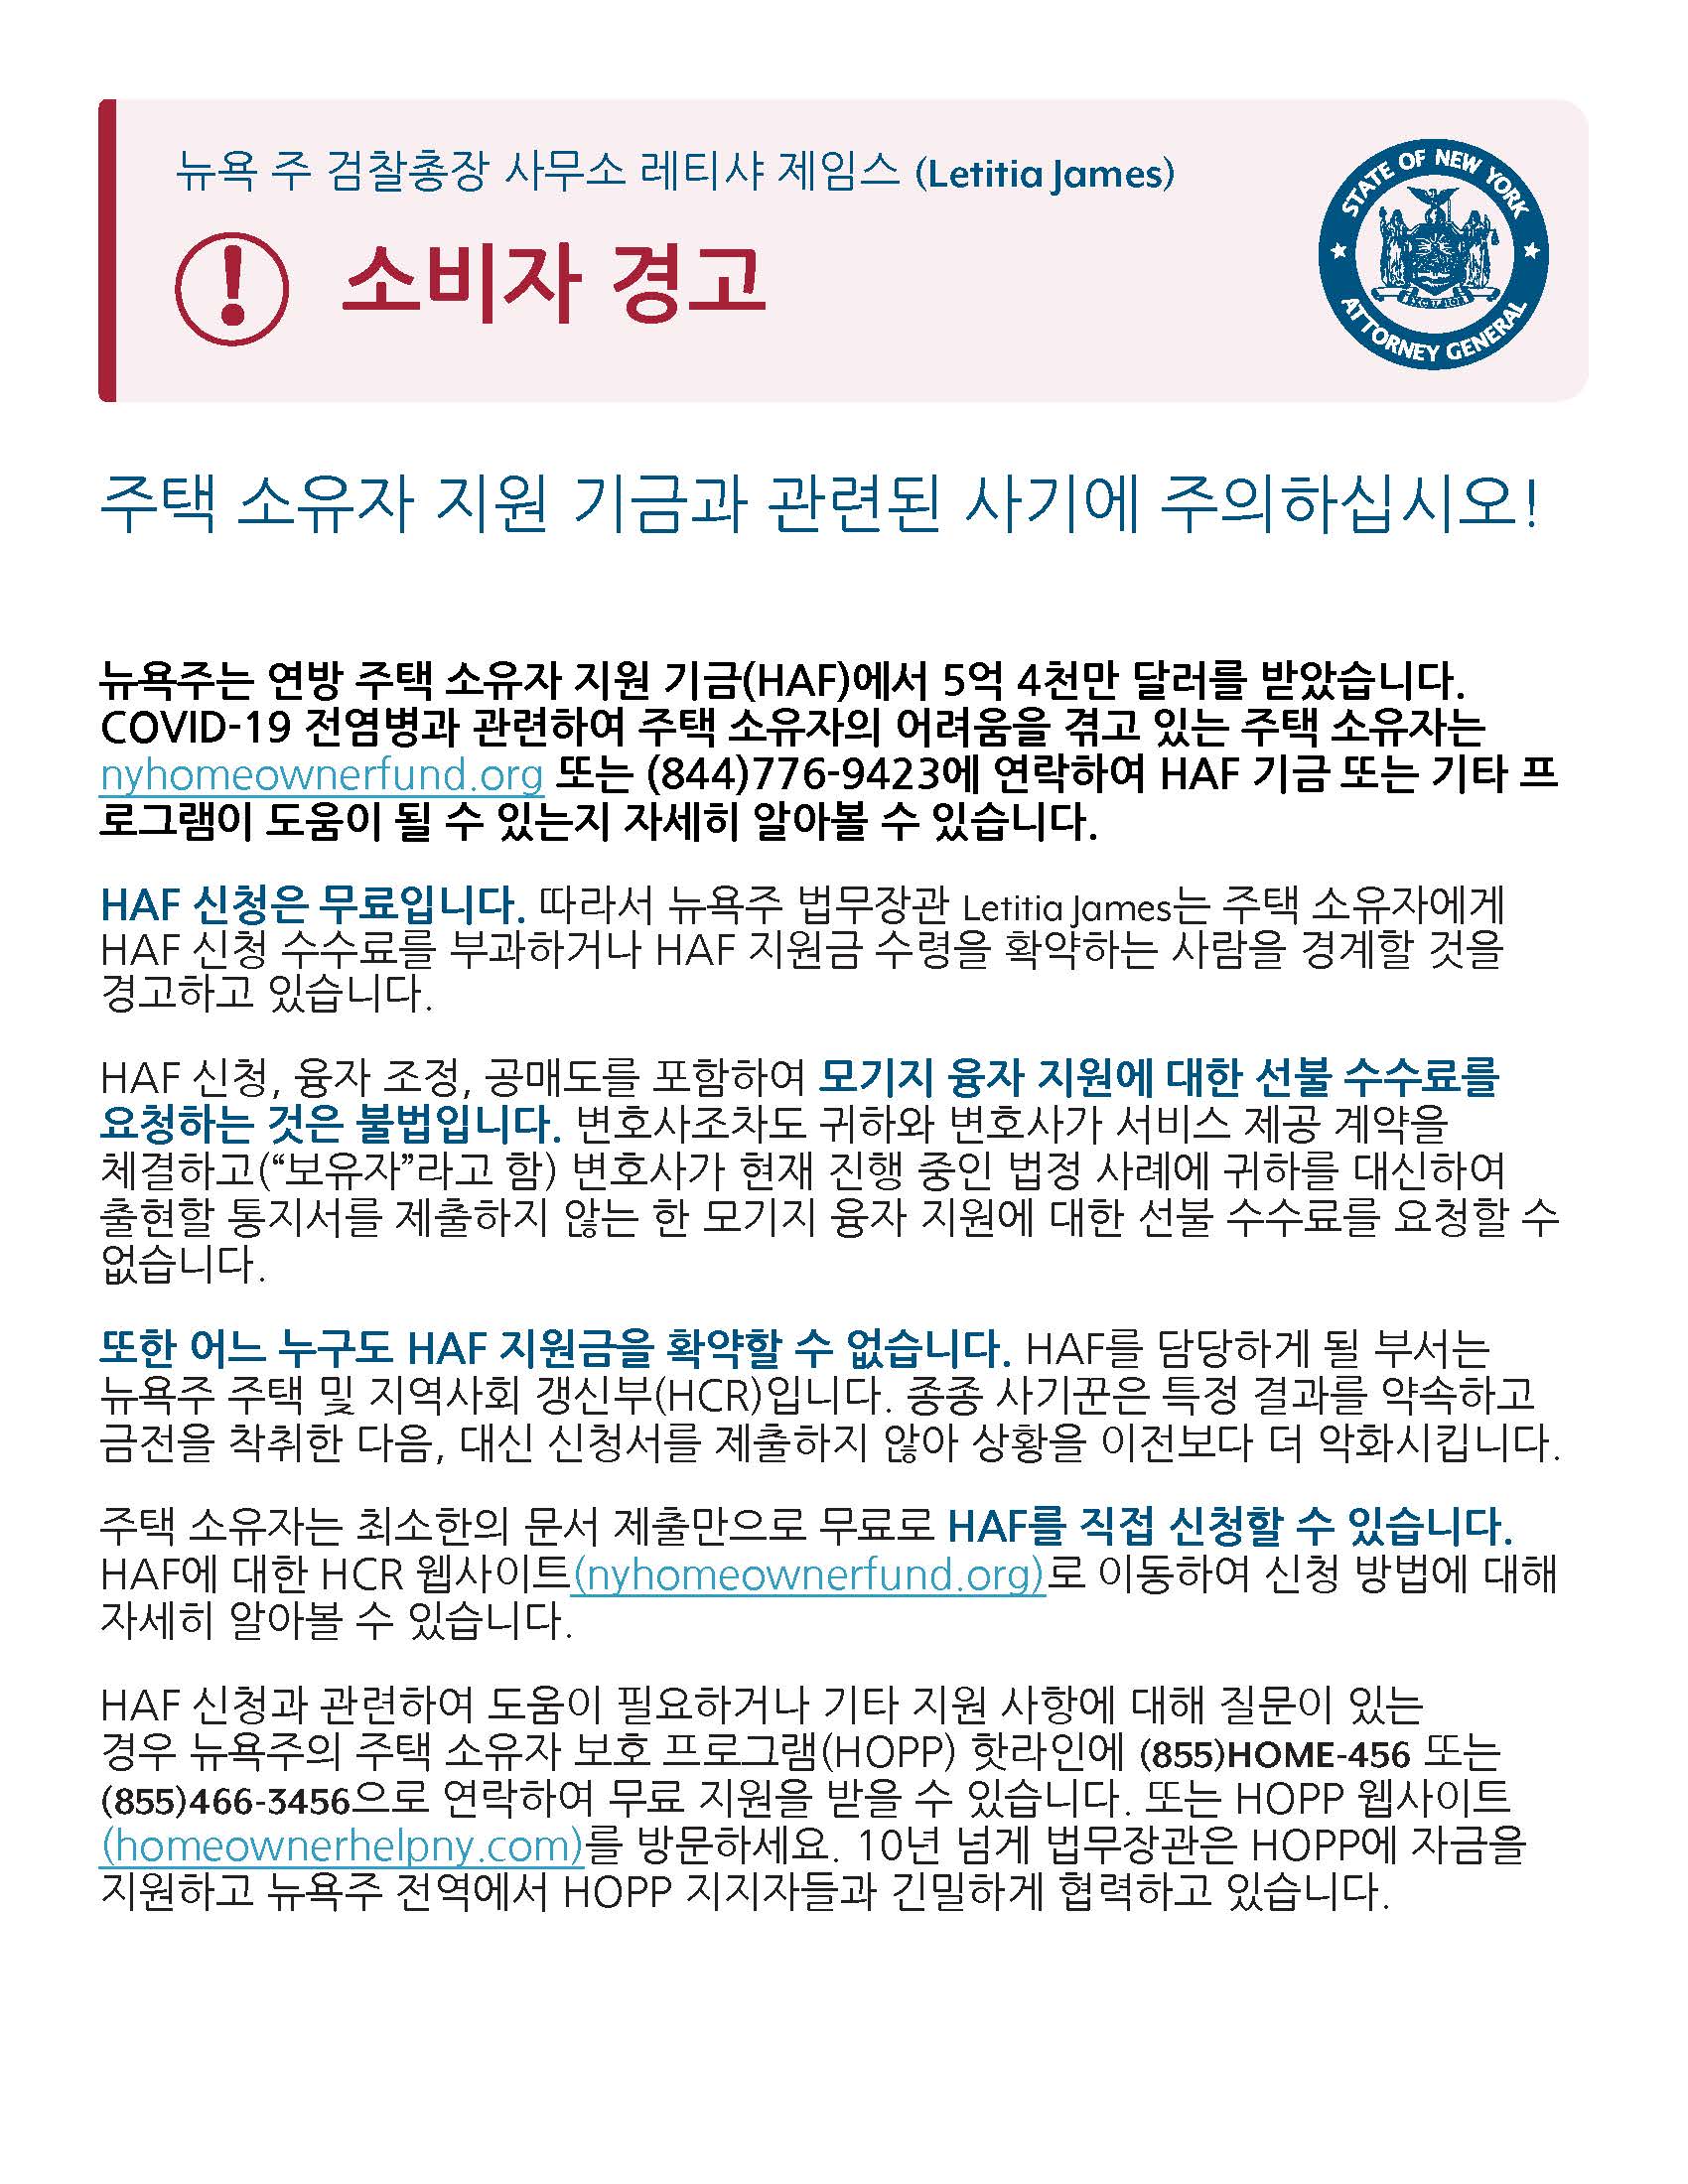 page 1 korean